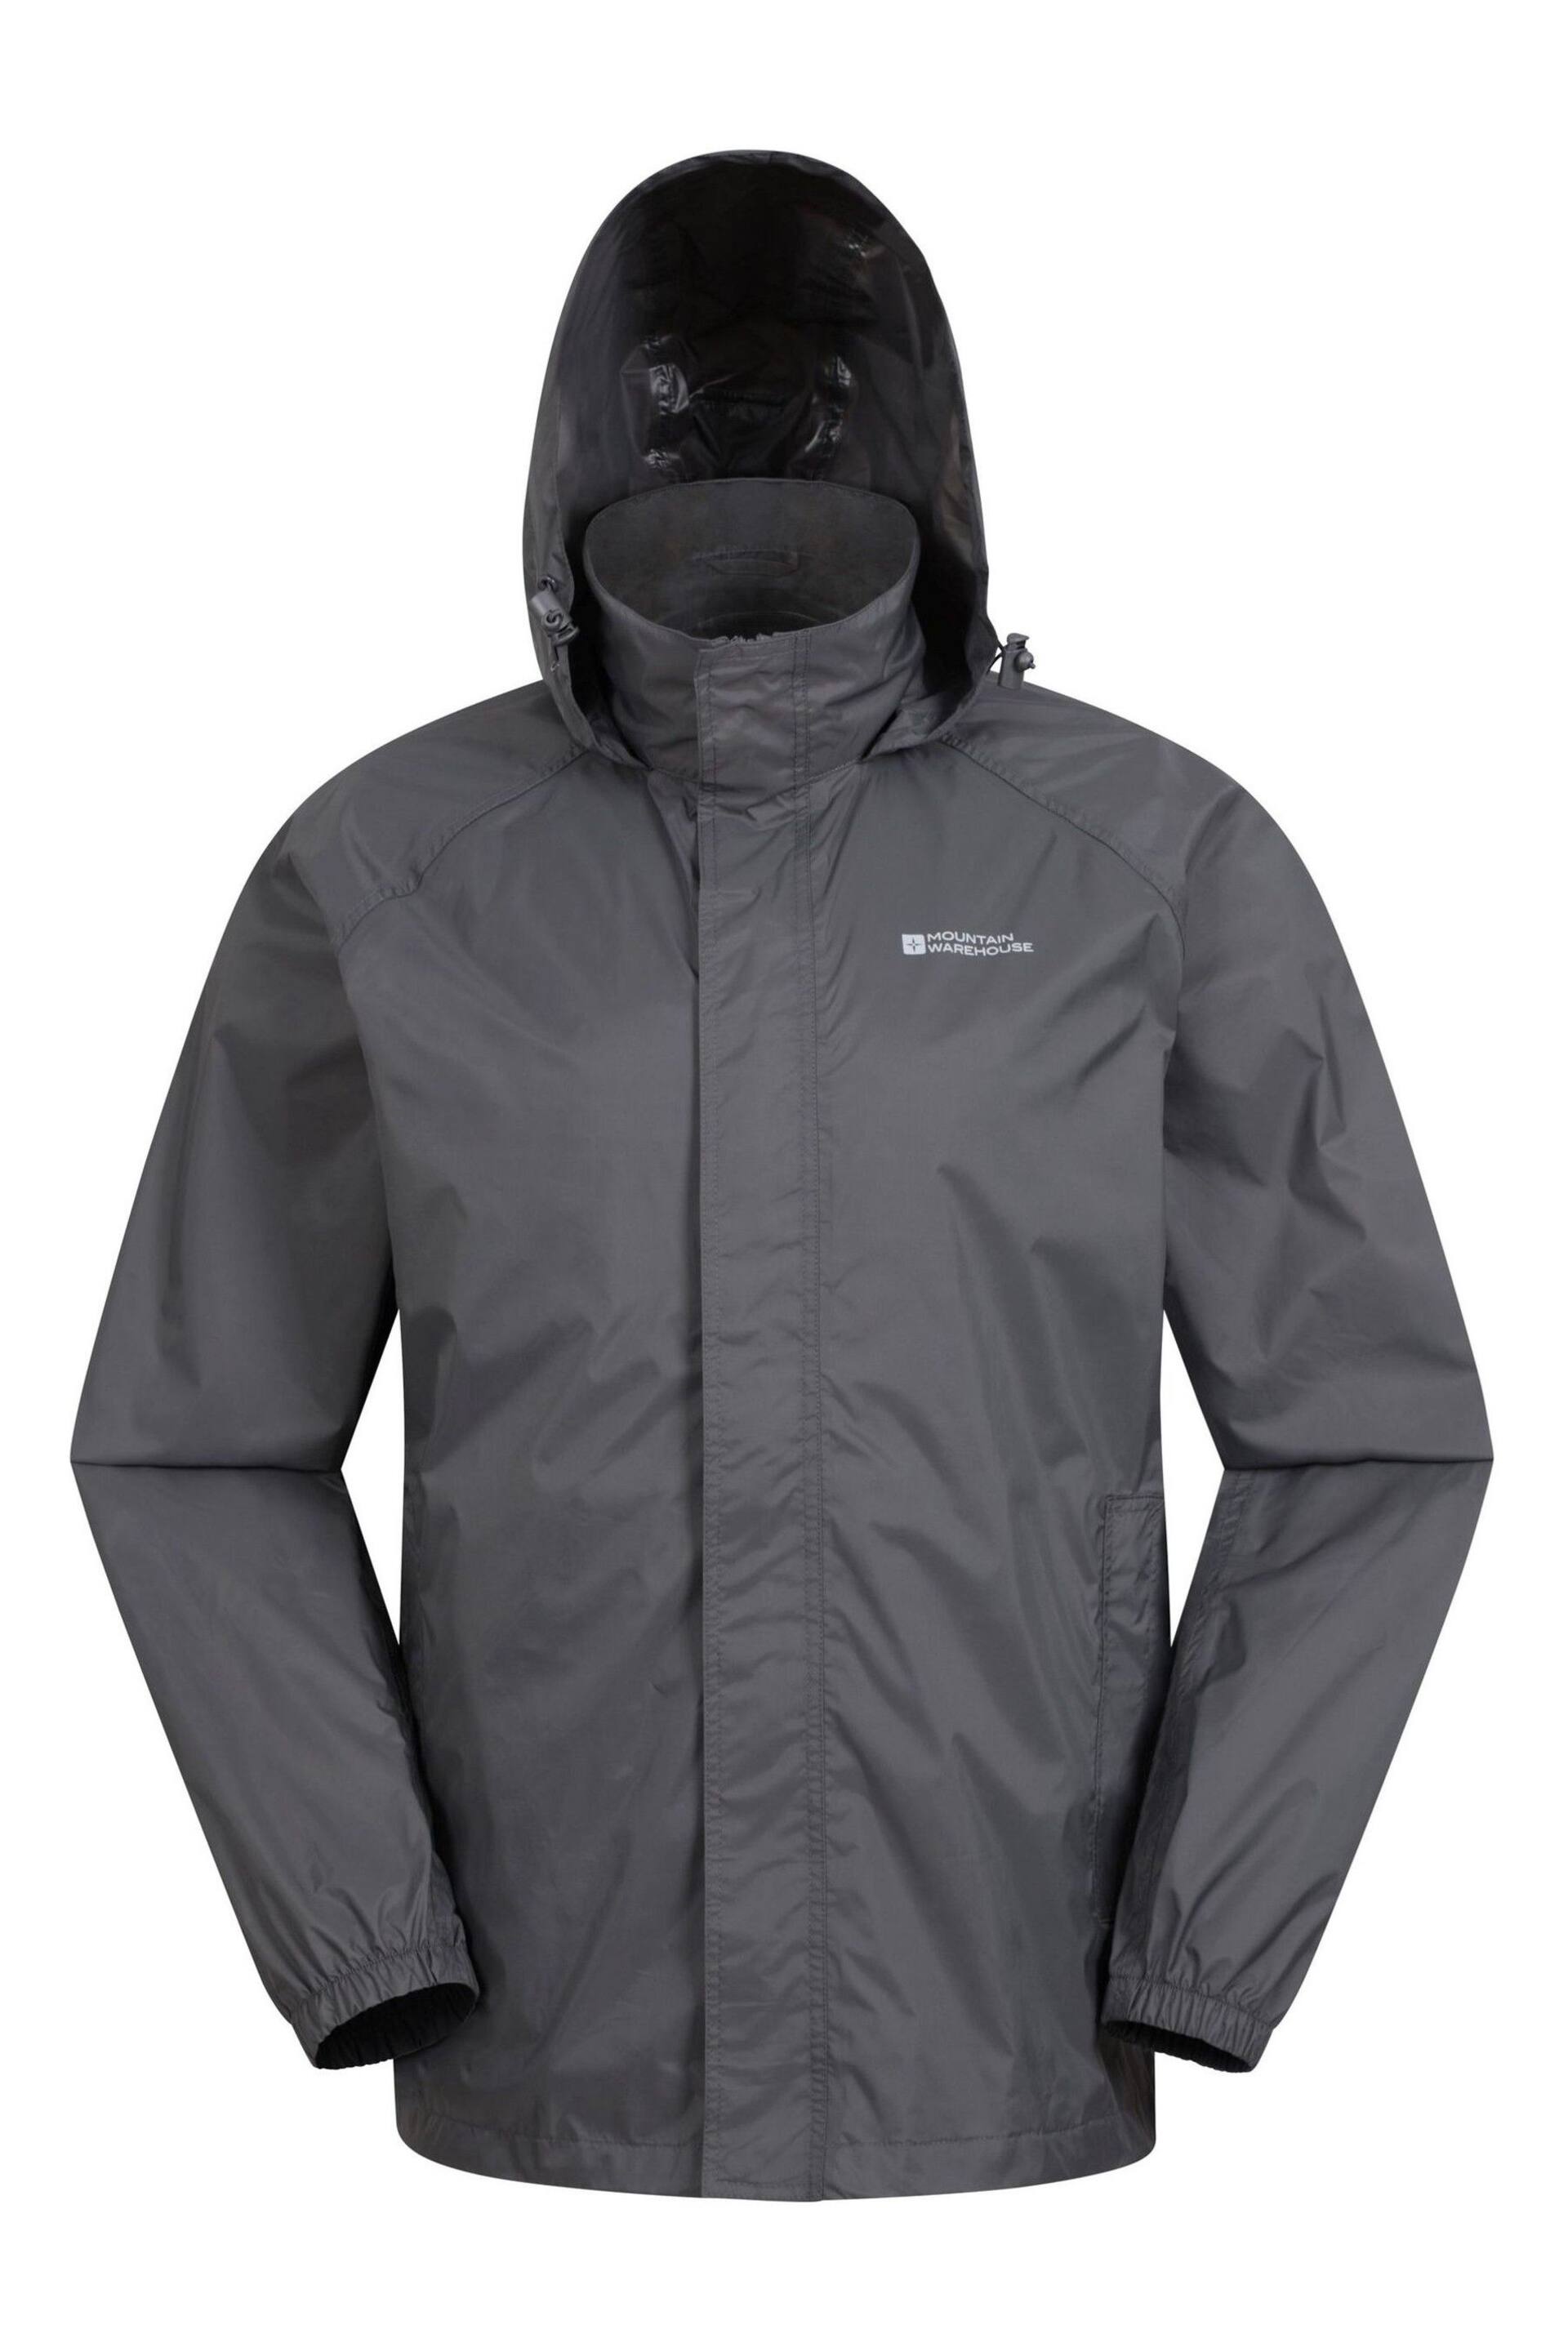 Mountain Warehouse Grey Pakka Waterproof Jacket - Mens - Image 1 of 5